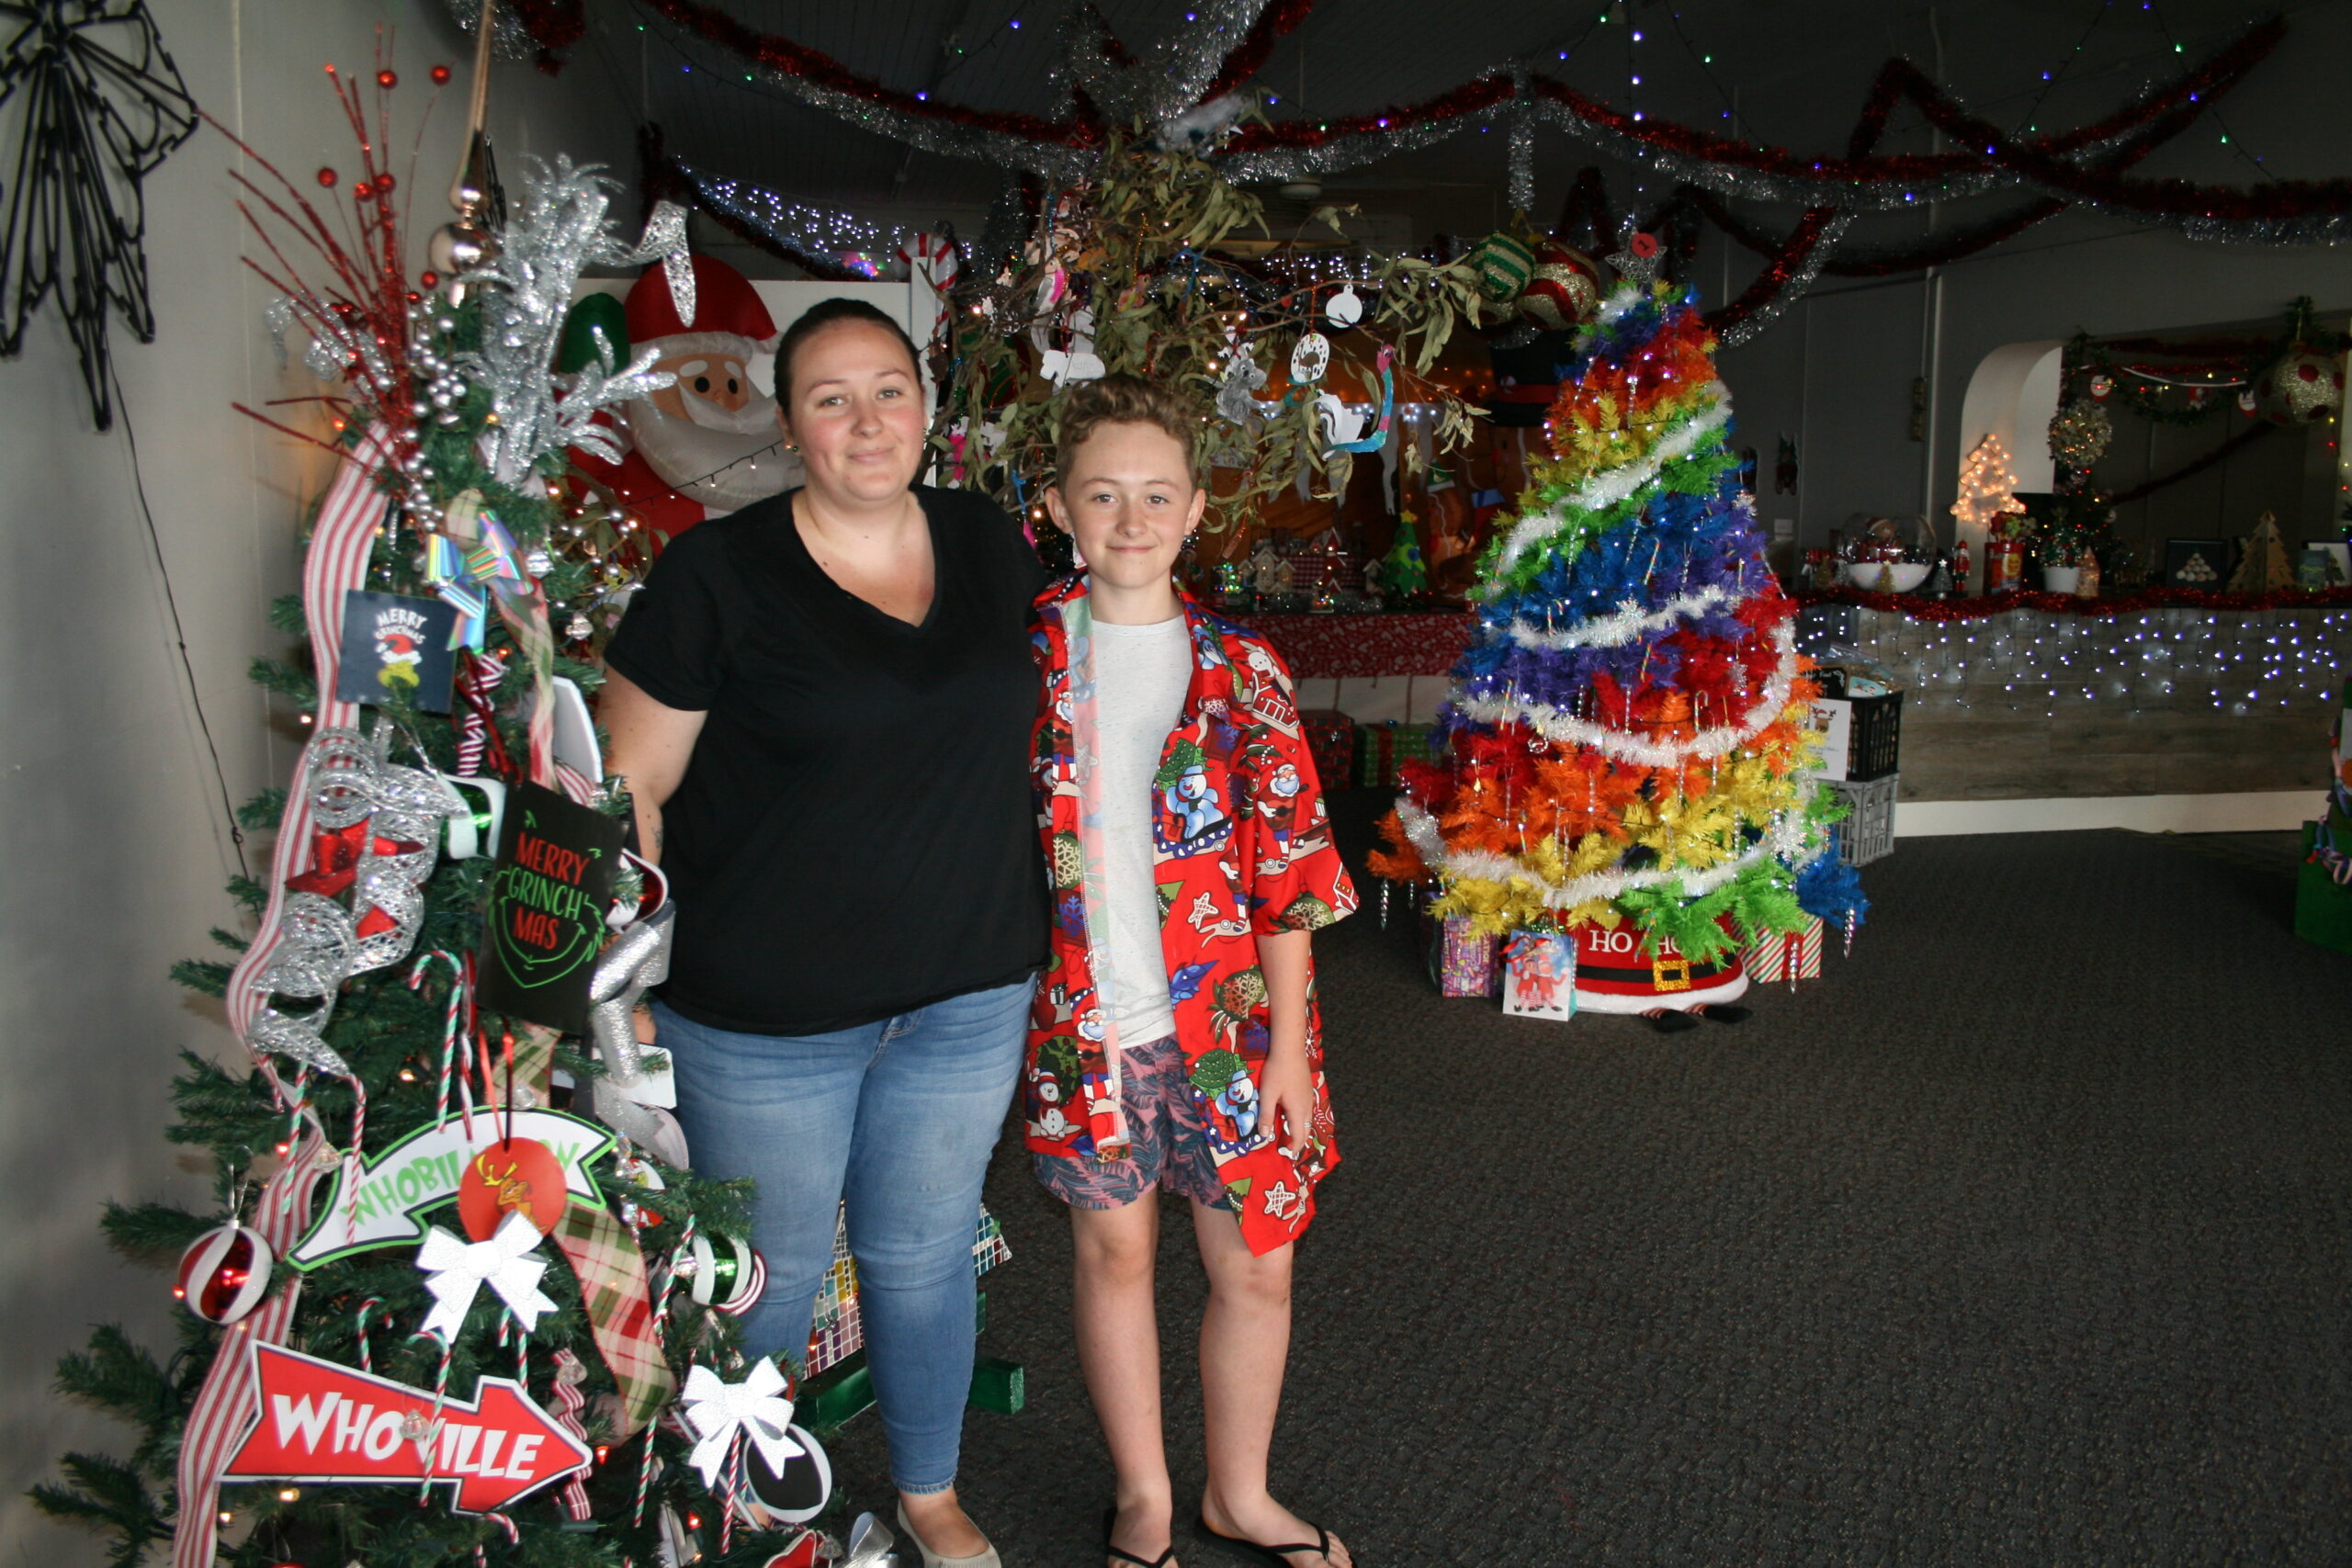 Pop-up ‘Christmas Tree Shop’ proves popular